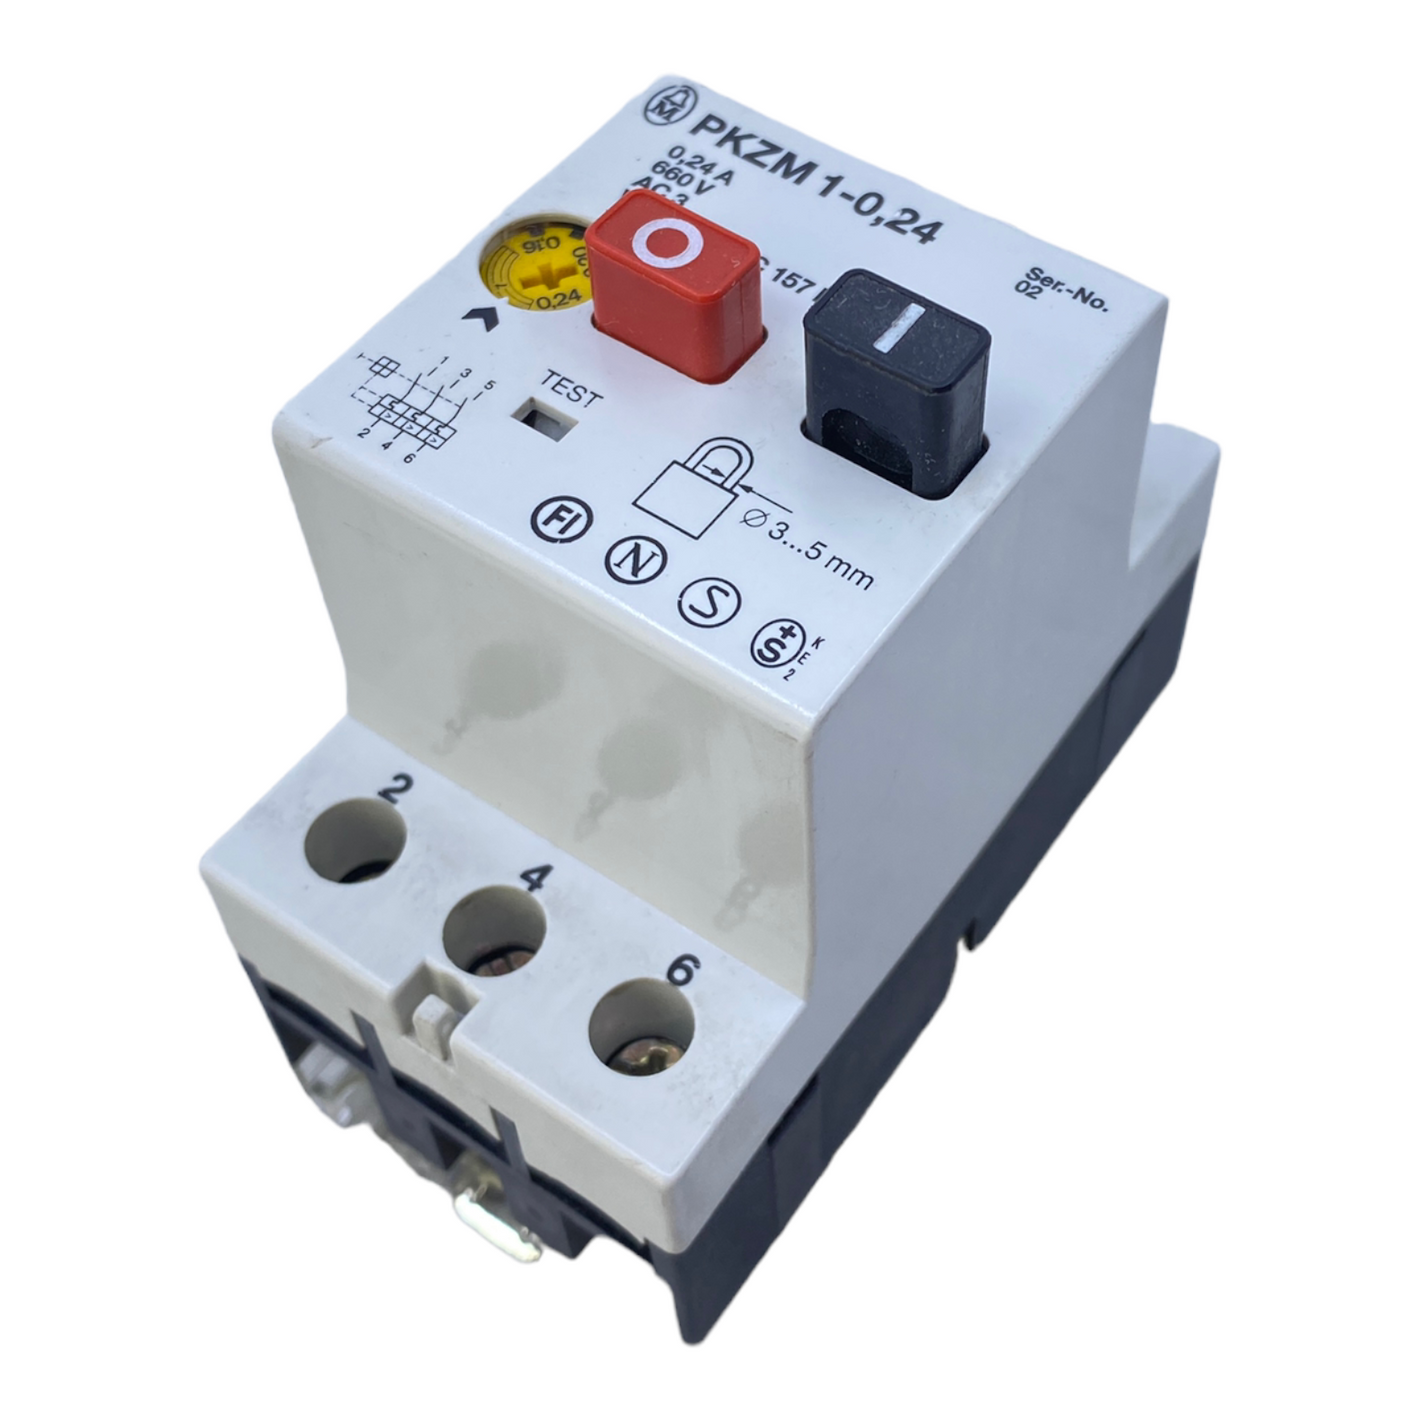 Klöckner Moeller PKZM1-0.24 motor protection switch 